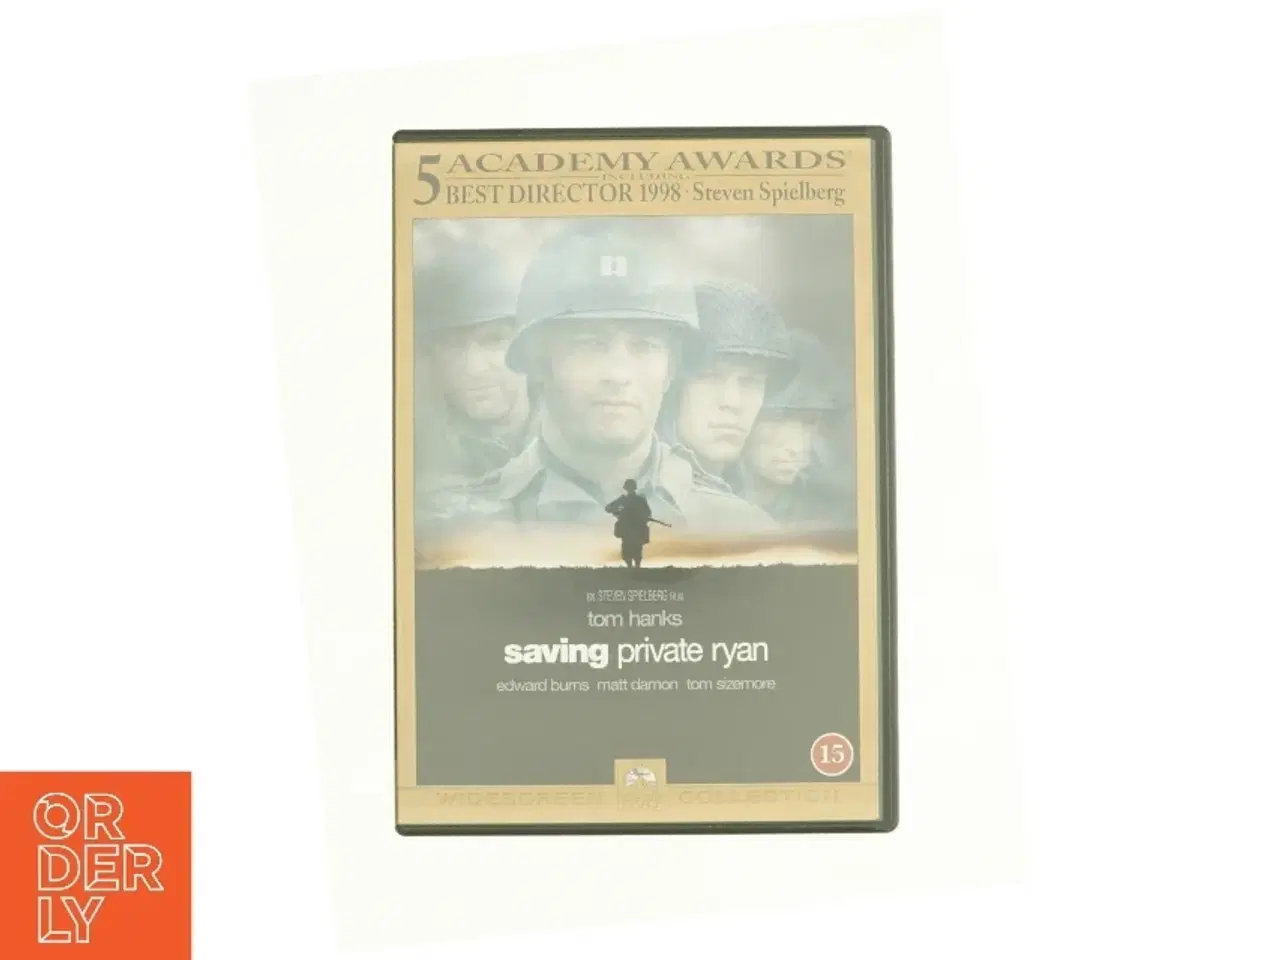 Billede 1 - Saving private ryan  fra DVD